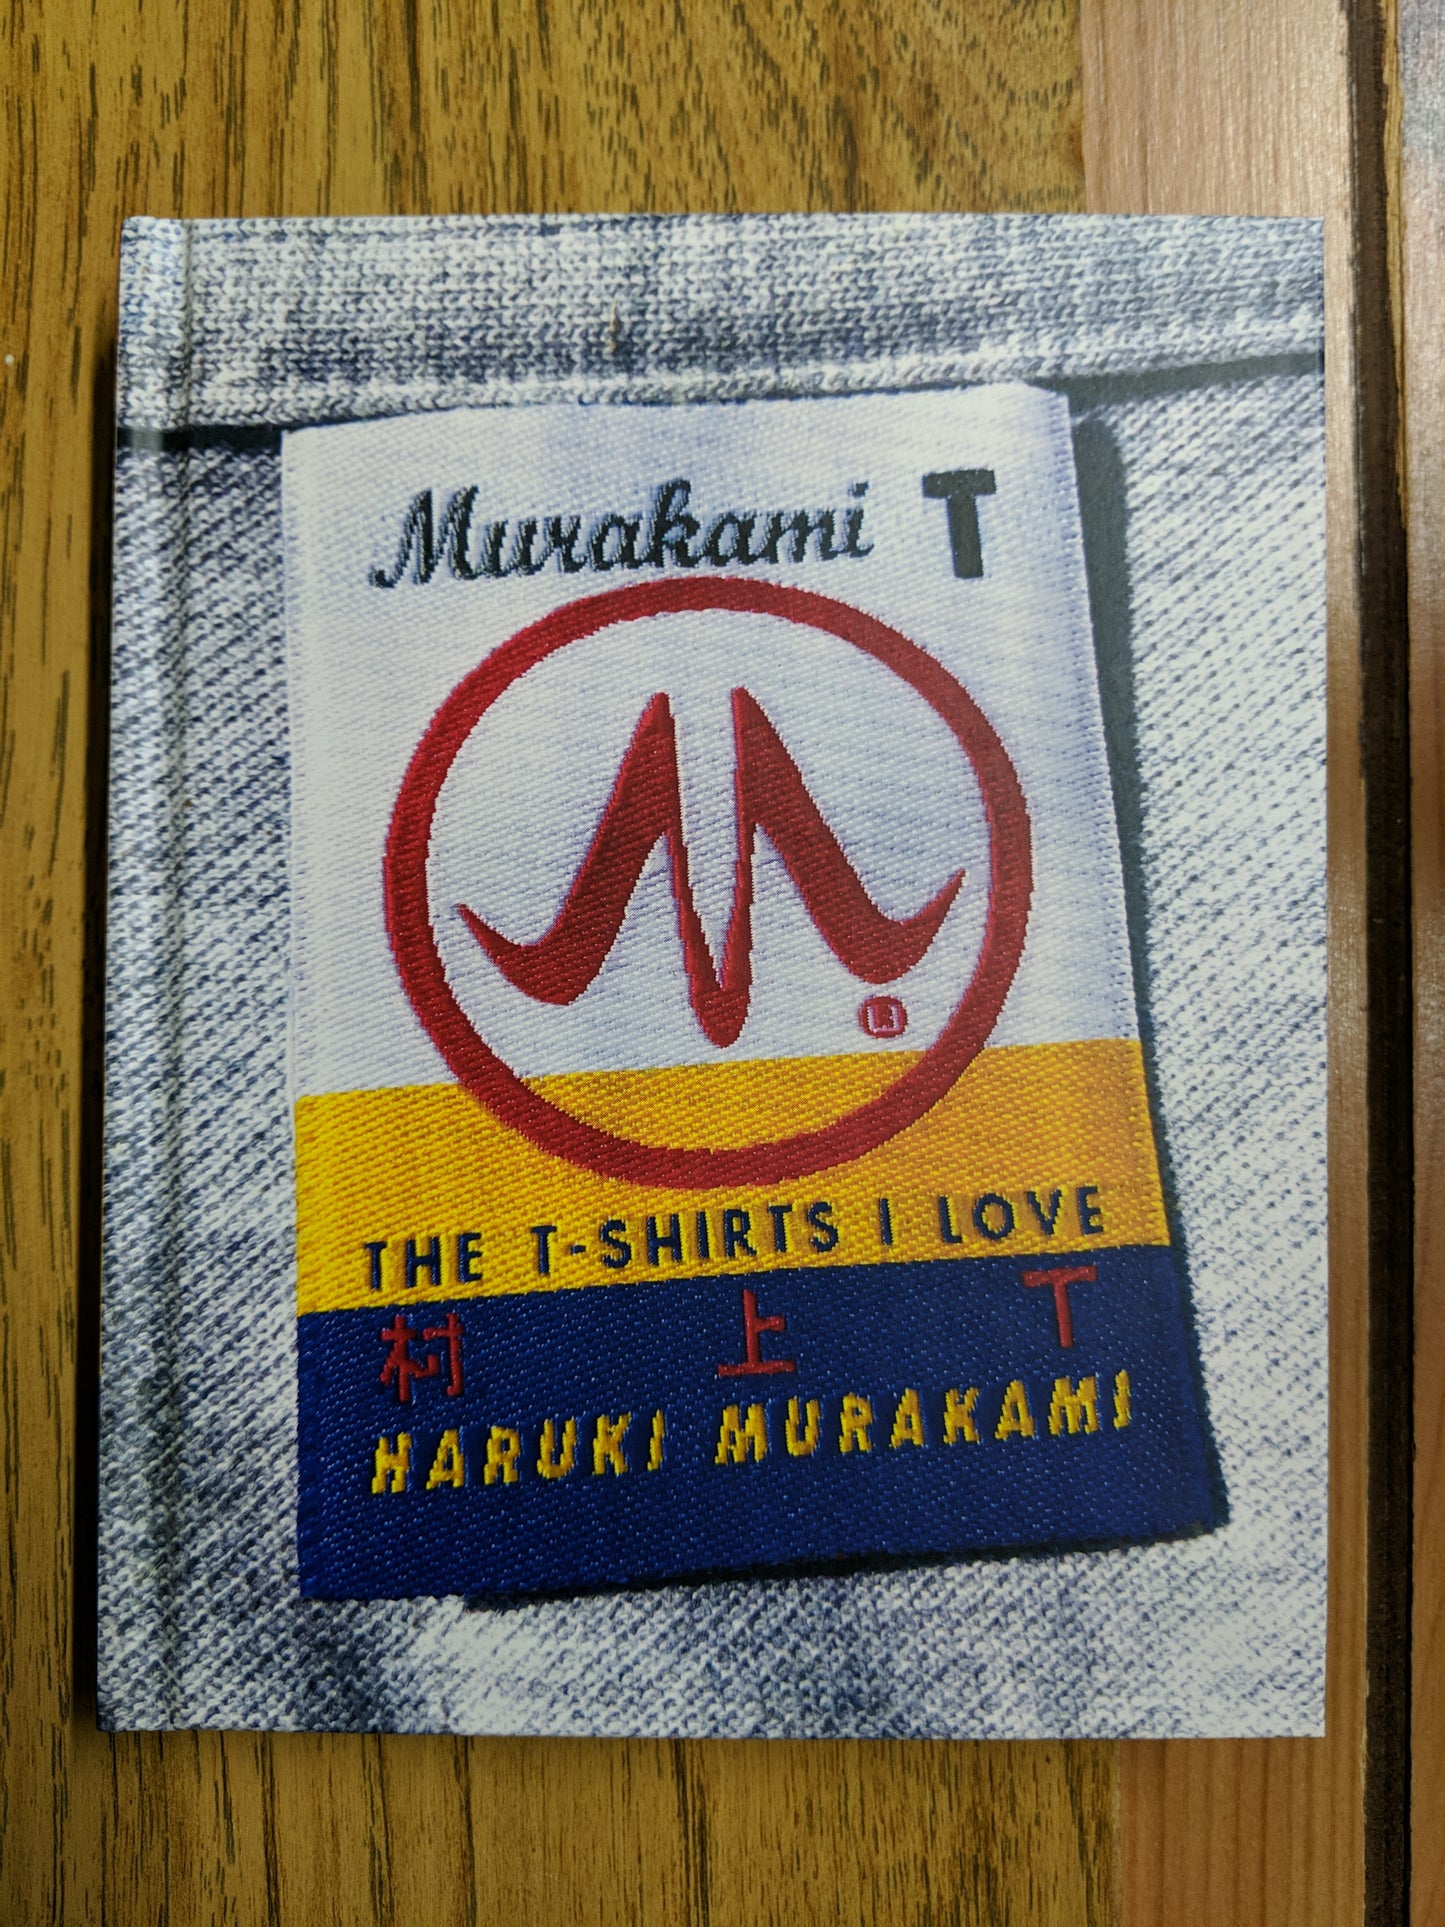 Murakami T: The T-Shirts I Love